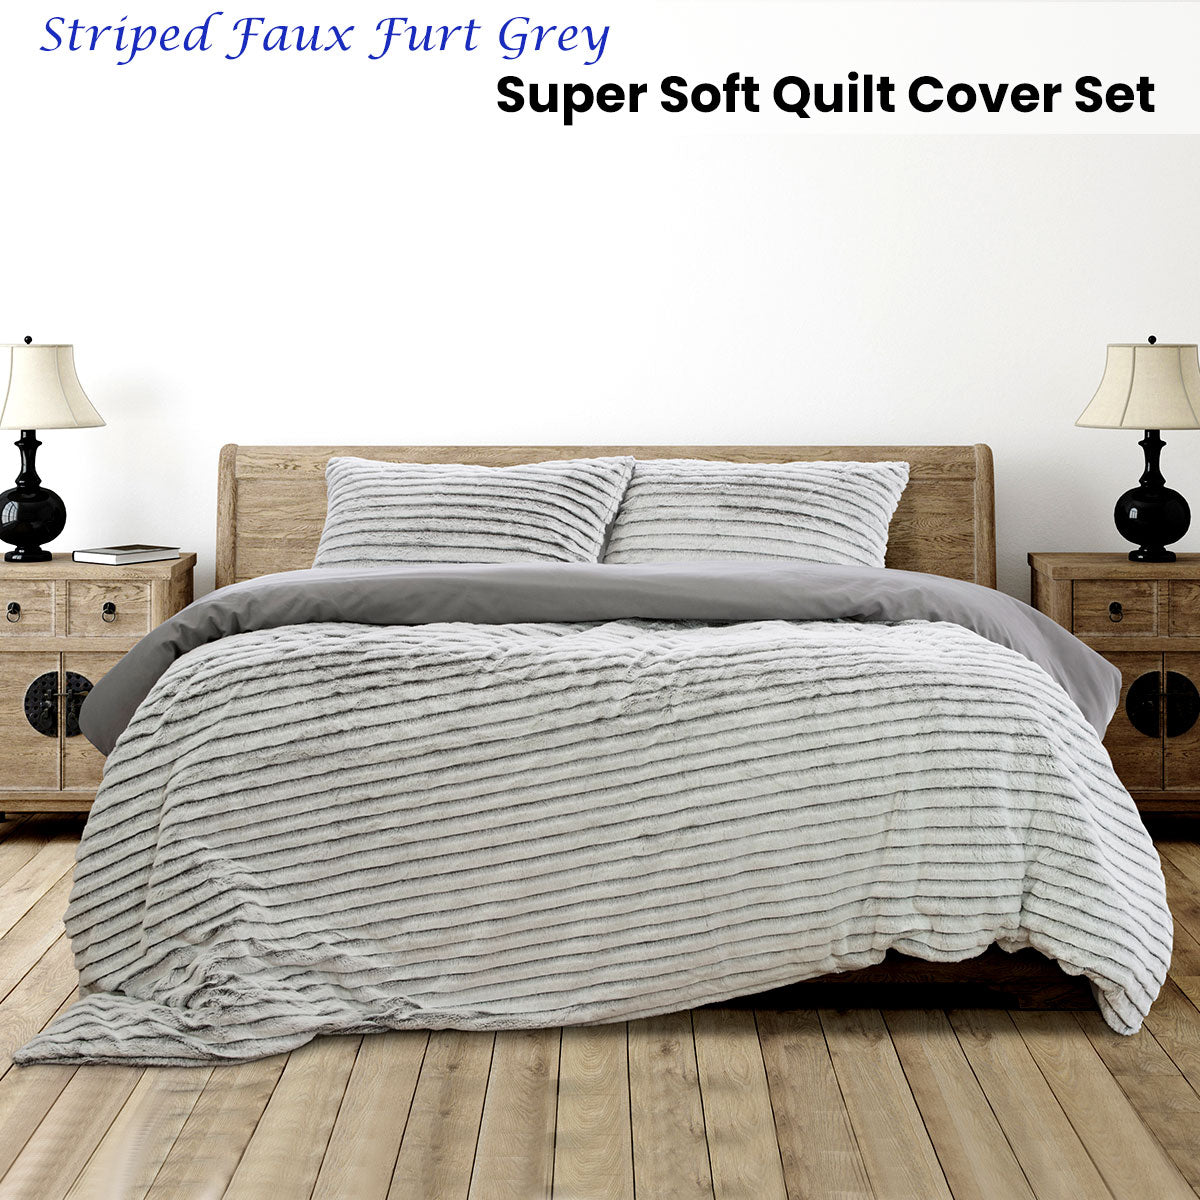 Ardor Striped Faux Fur Grey Super Soft King Size Quilt Cover Set